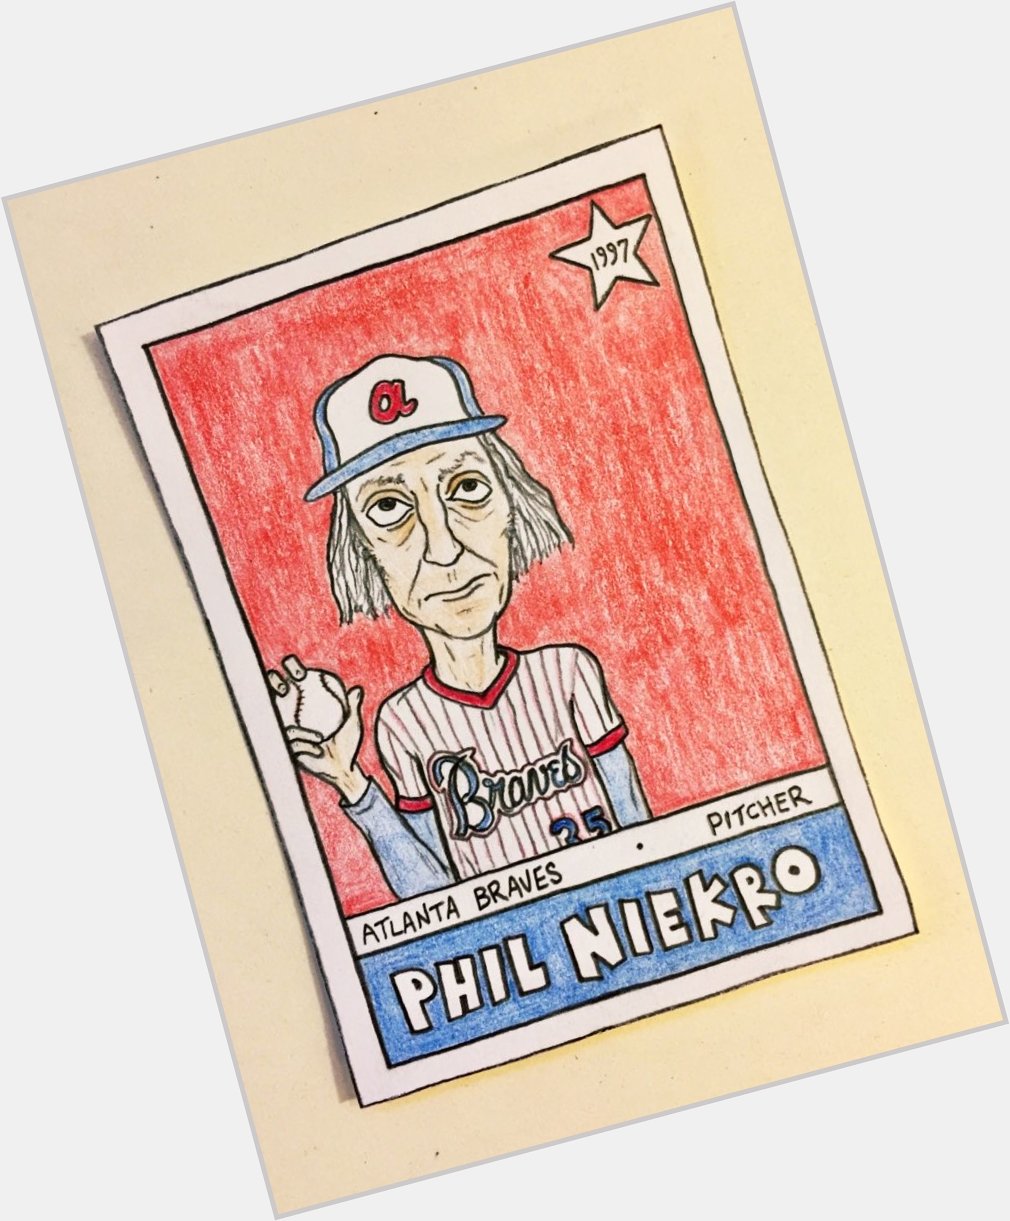 Wishing a very happy 80th birthday to Hall of Famer Phil Niekro! 